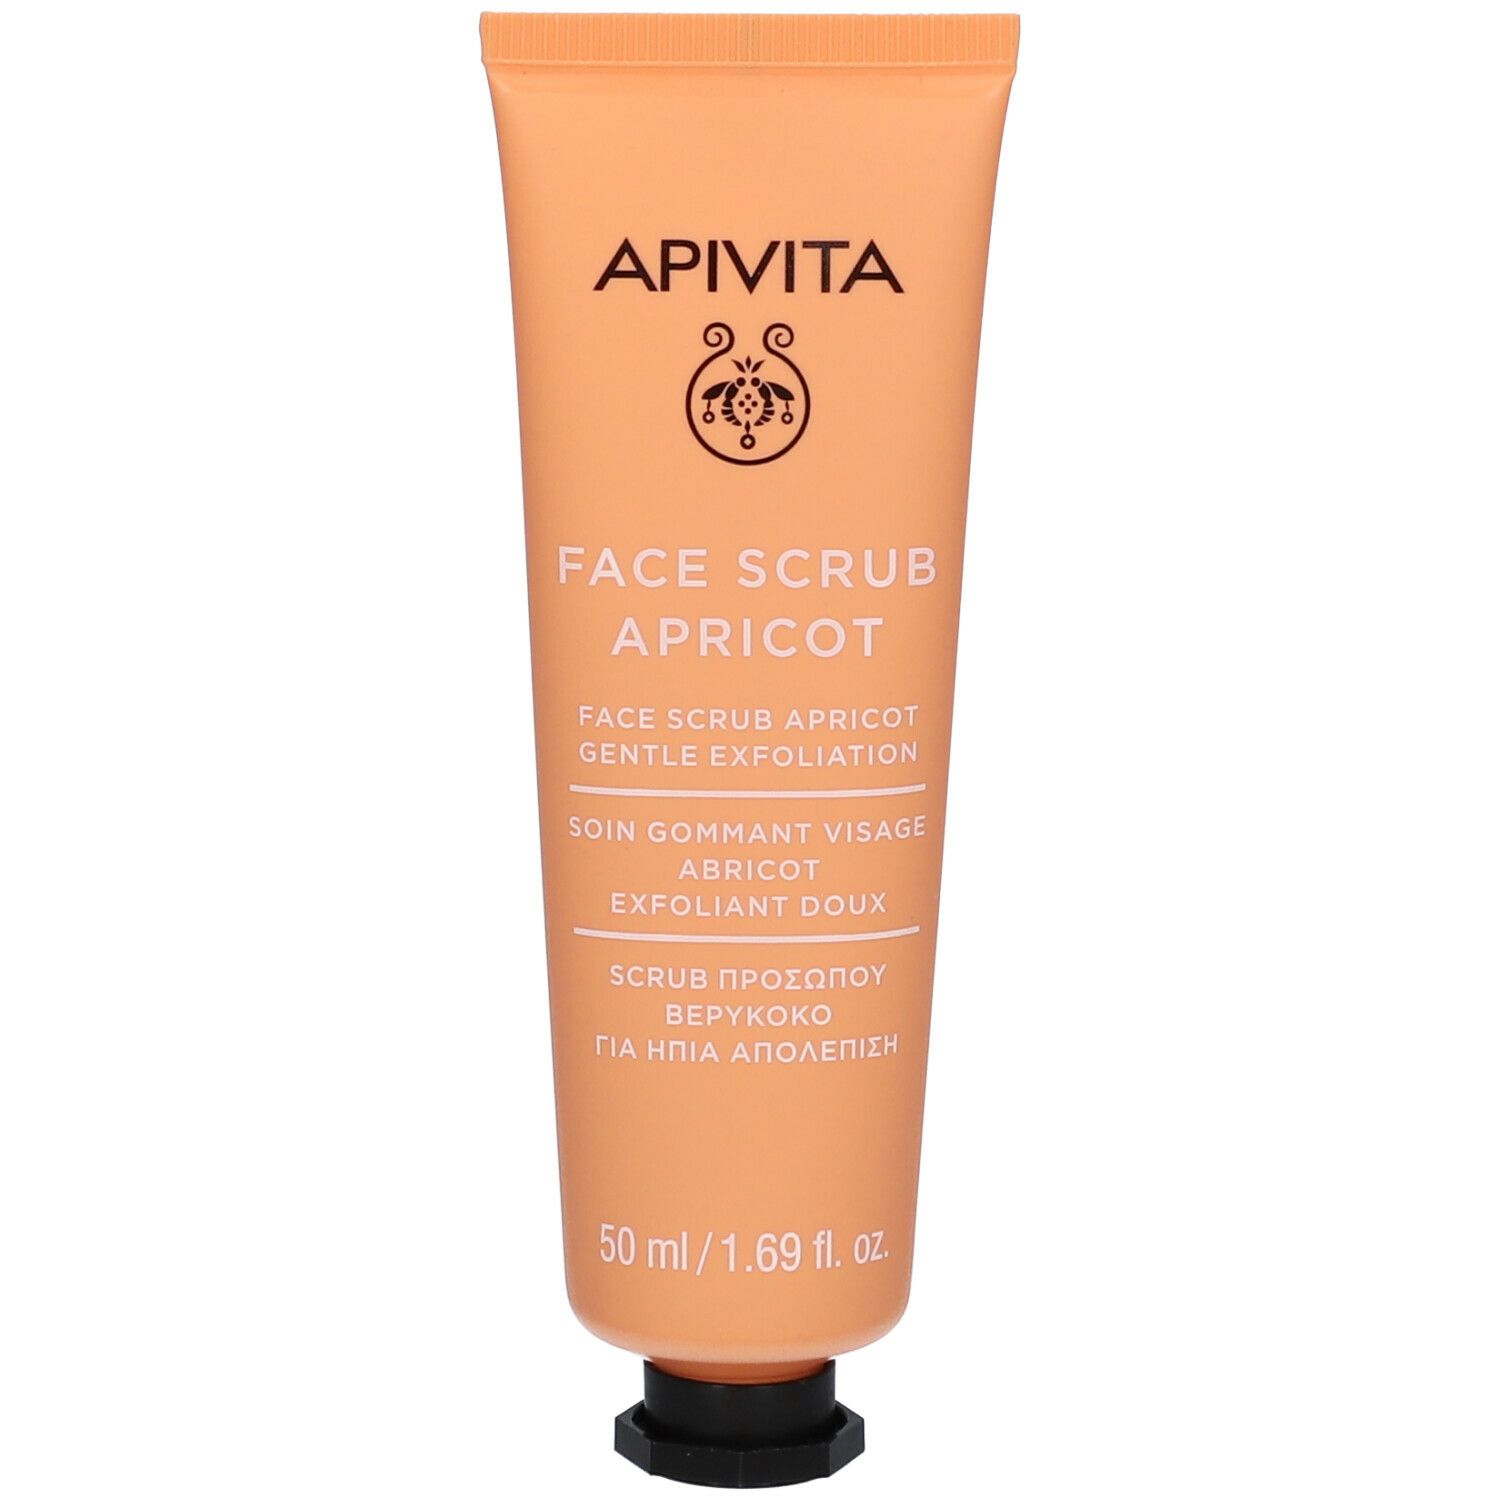 Apivita Face Scrub Soin Gommant Visage Abricot - Exfoliant Doux